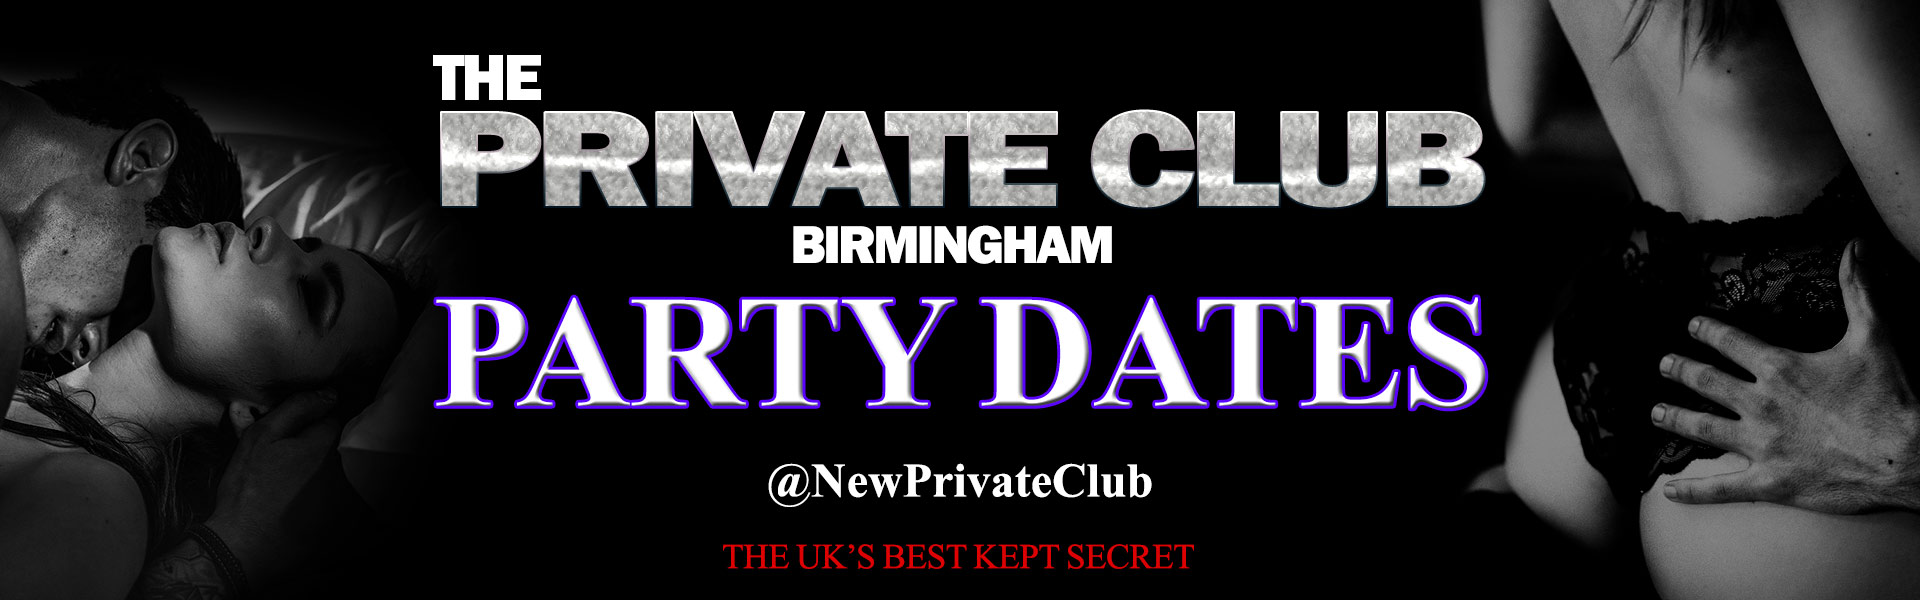 private-club-birmingham-party-dates